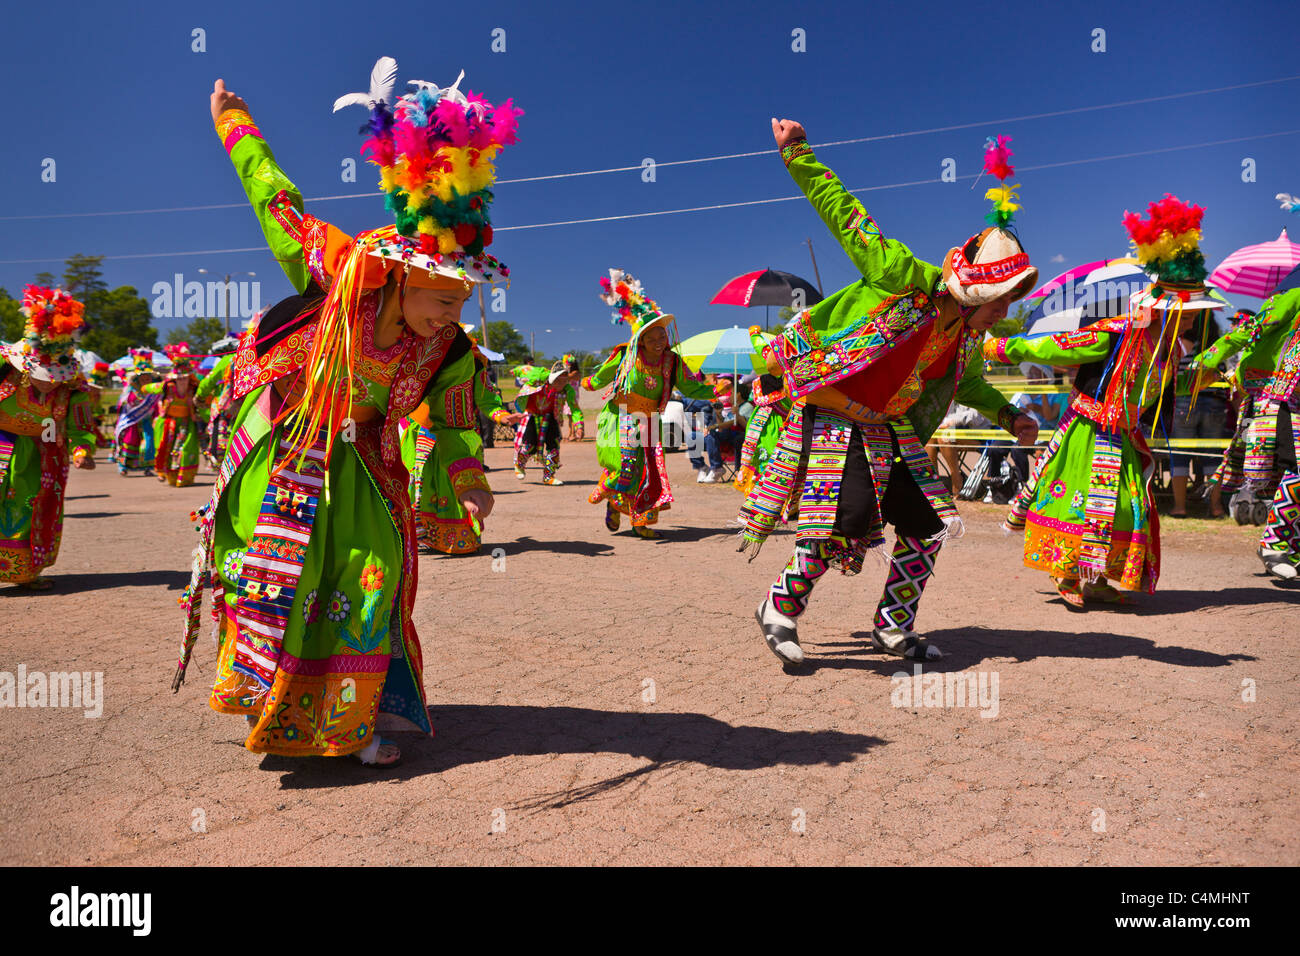 MANASSAS, VIRGINIA, USA - Bolivian folklife festival parade with dancers in costume. Stock Photo